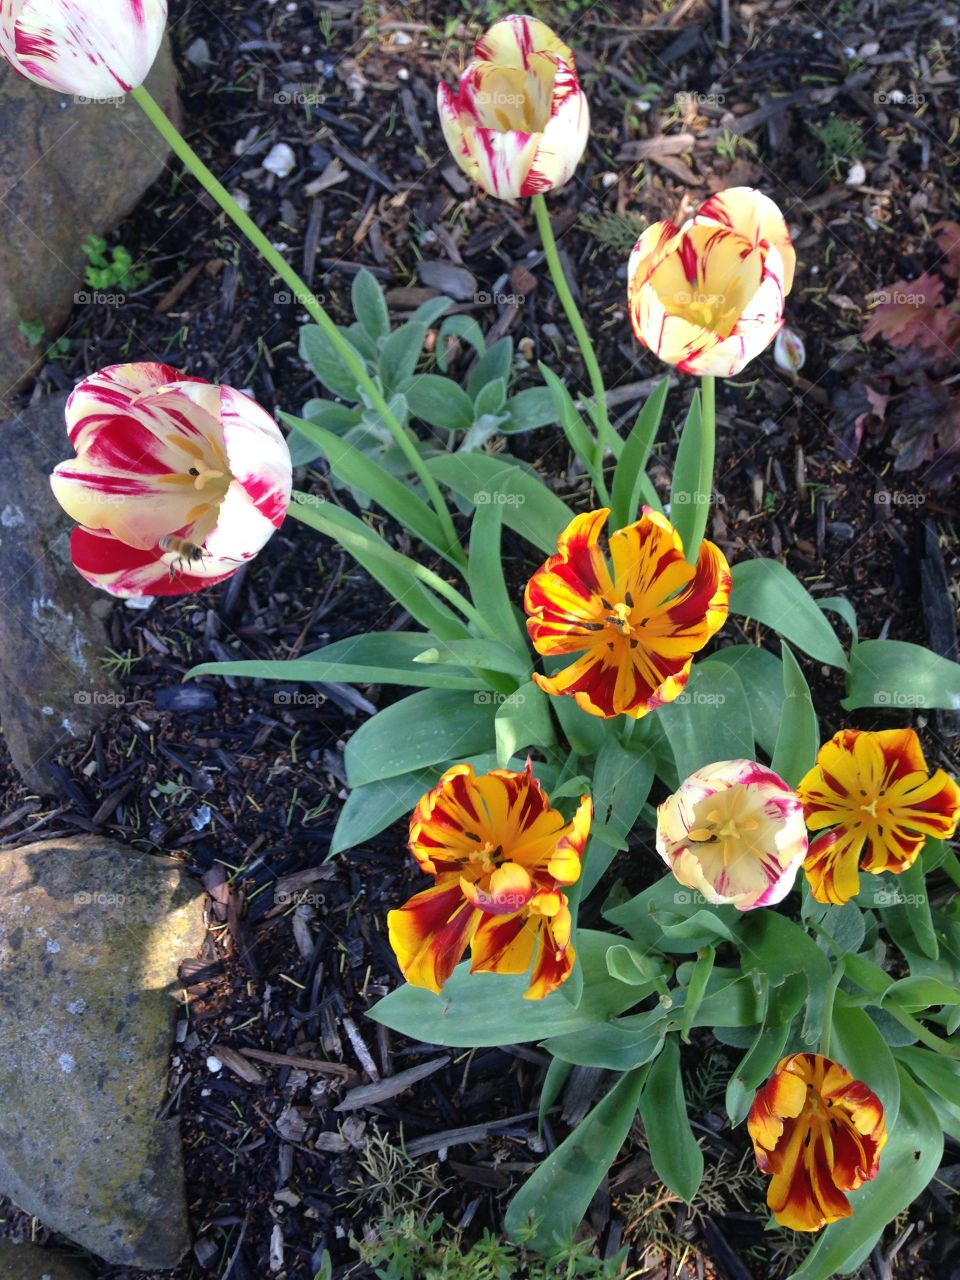 Tulips 